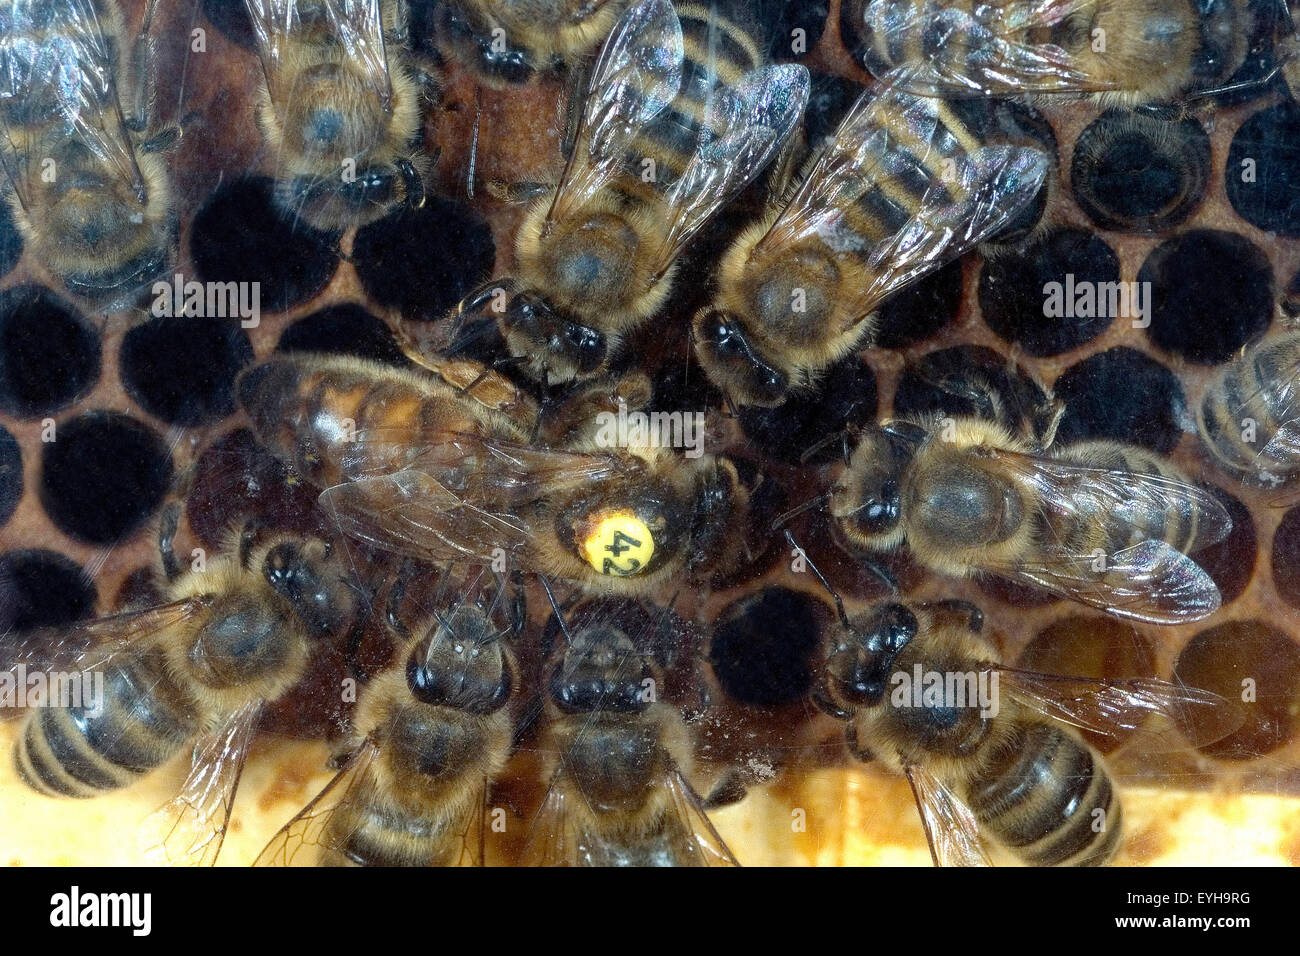 Biene; Apis mellifera; Honigbiene, Bienenkoenigin, Stock Photo